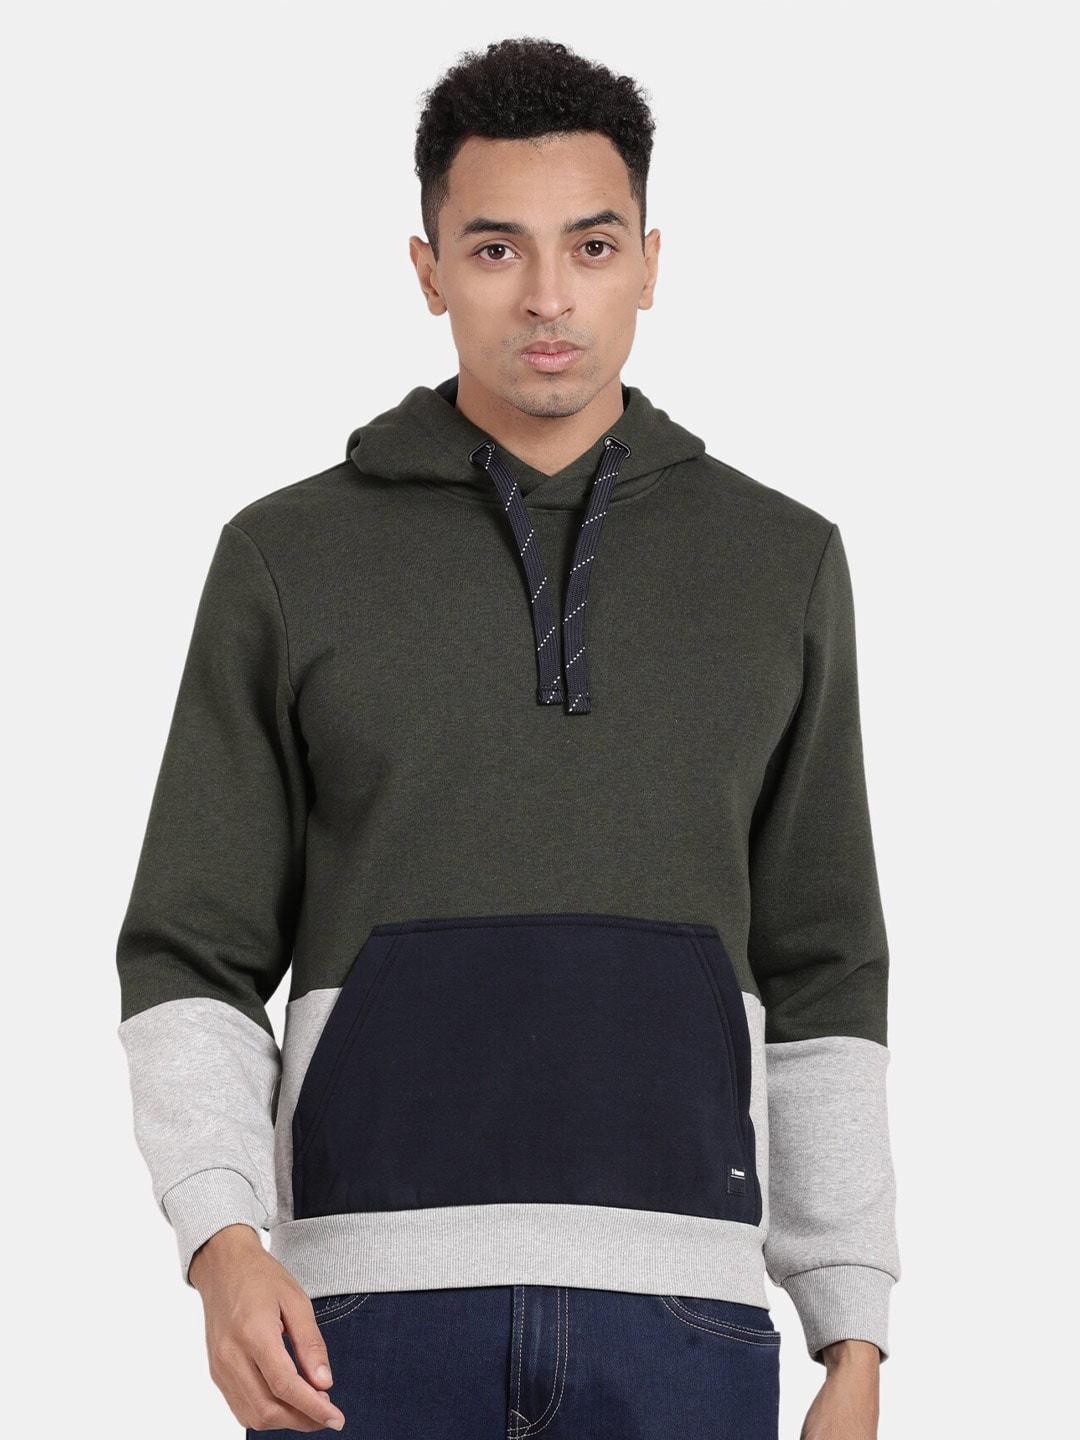 t-base-colourblocked-hooded-pullover-sweatshirt